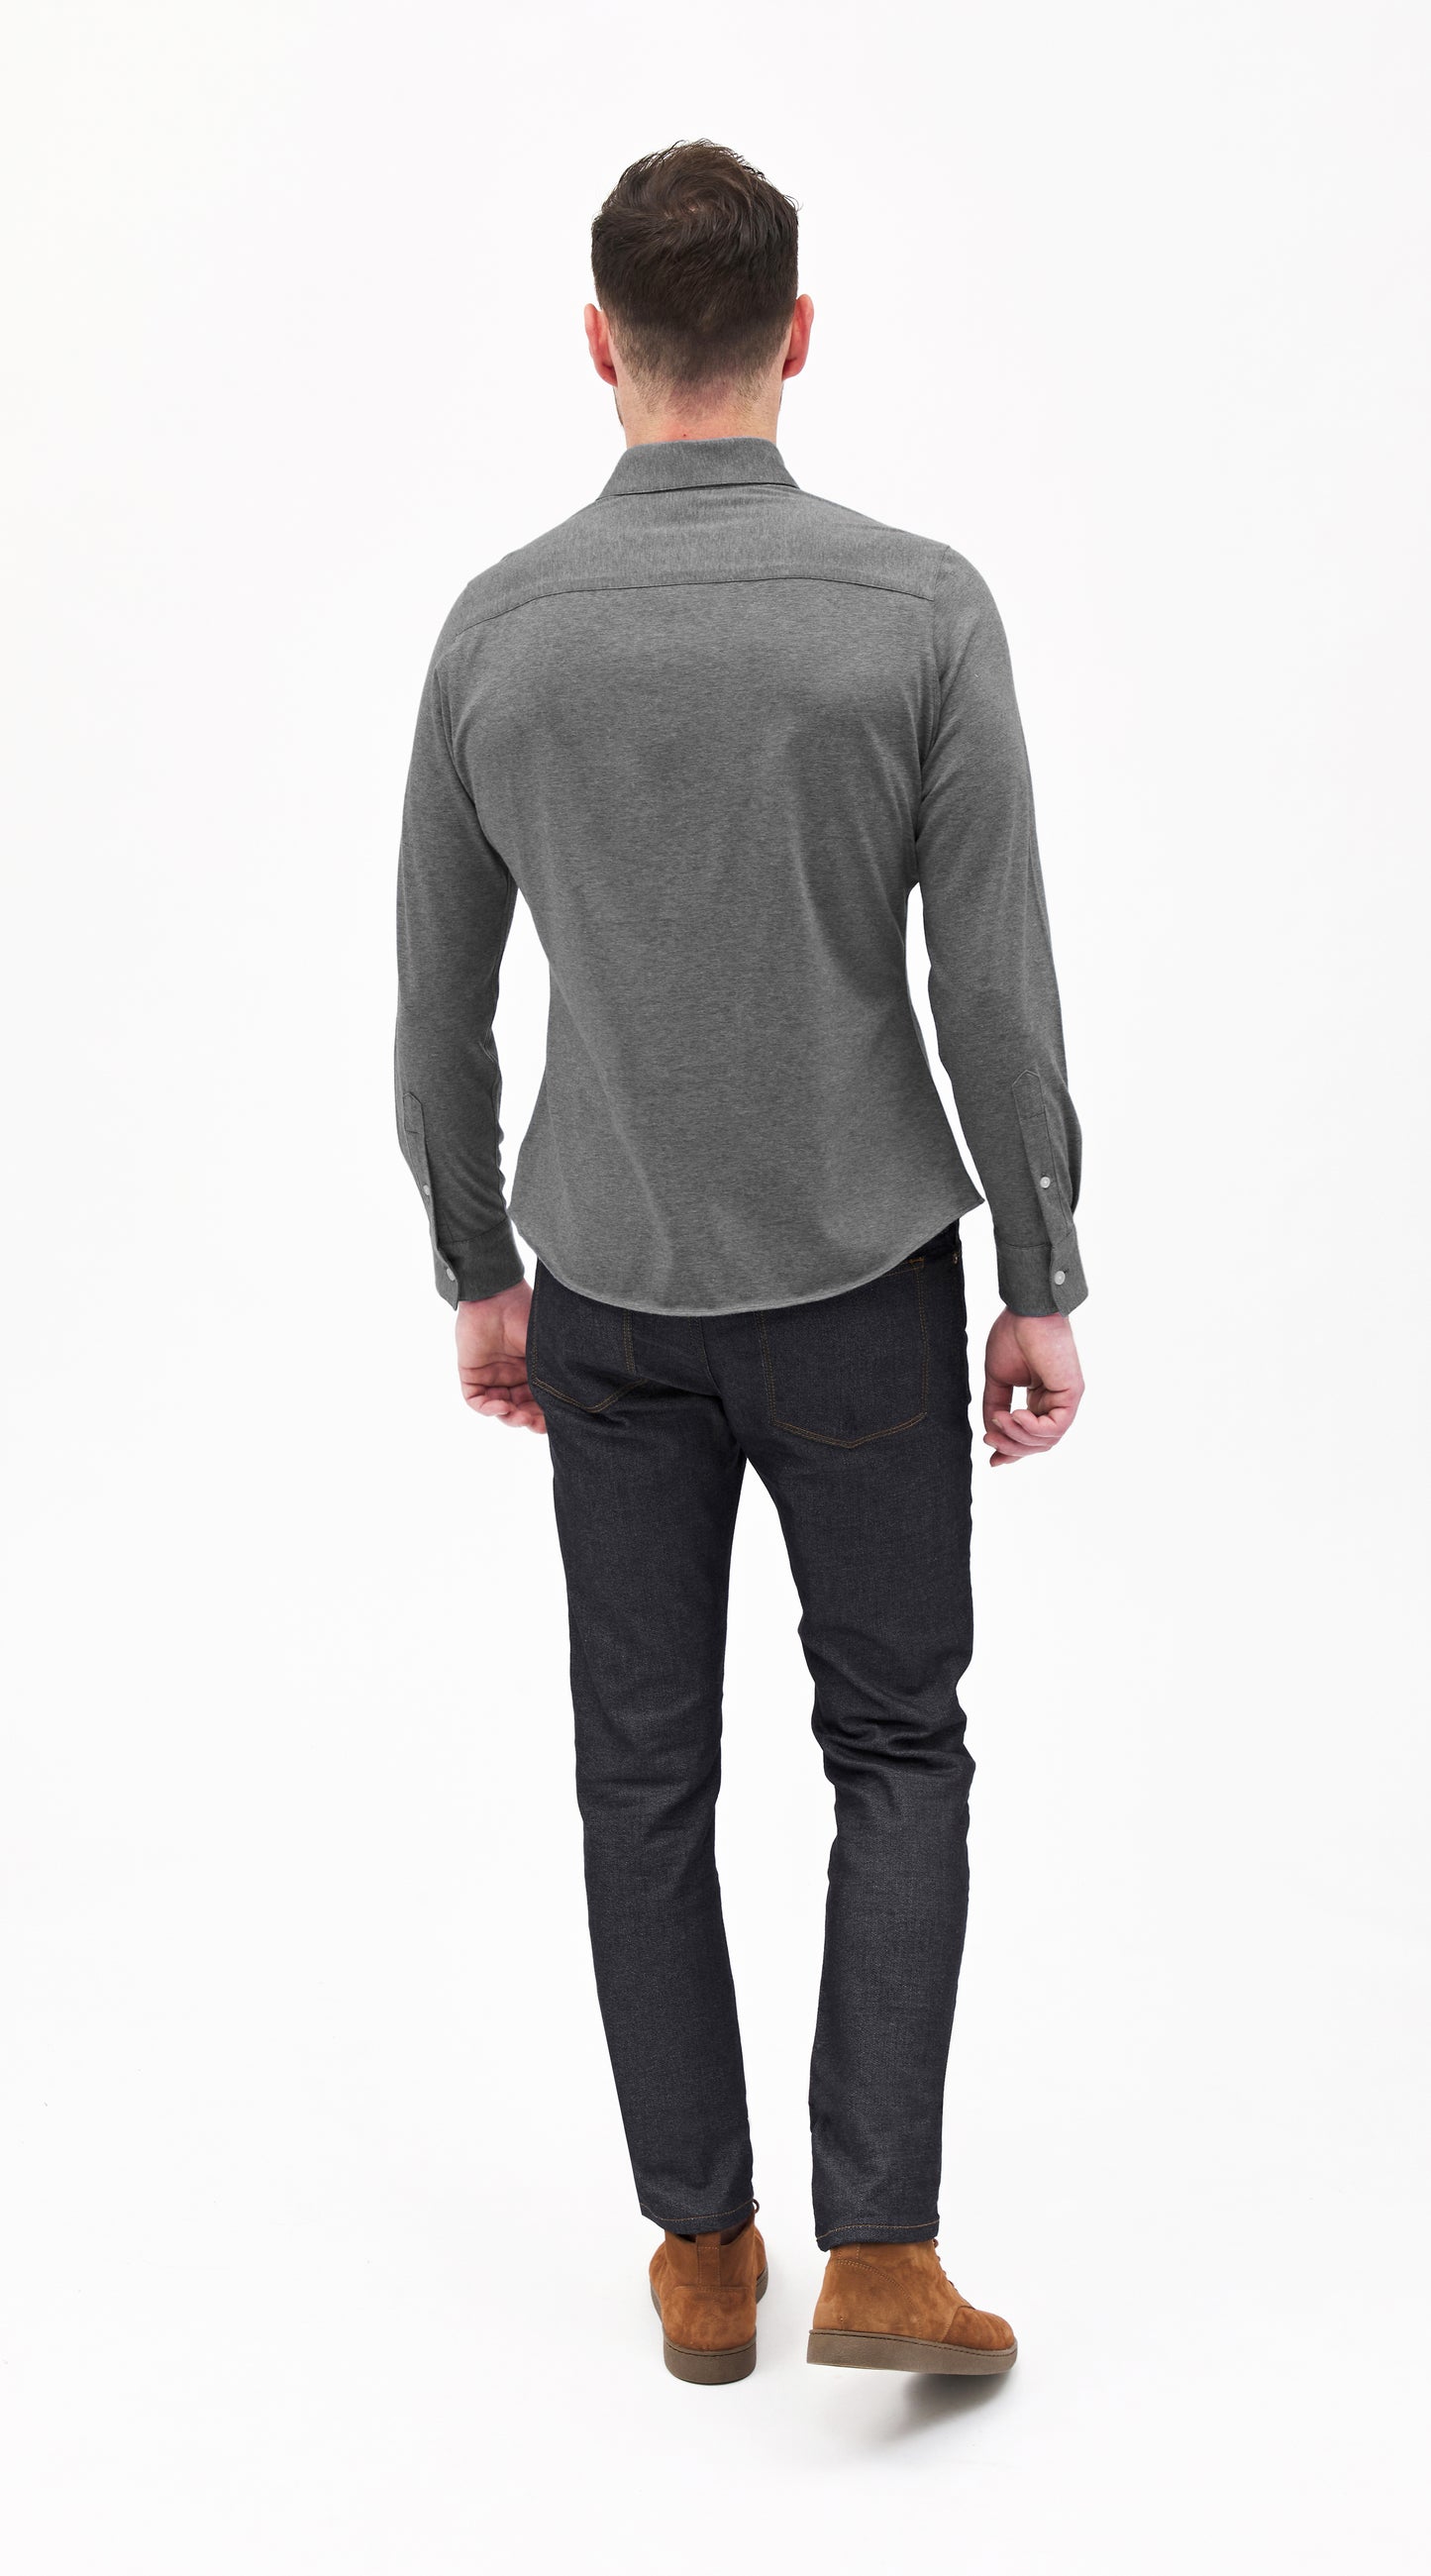 Grey Half-Placket Jersey Shirt